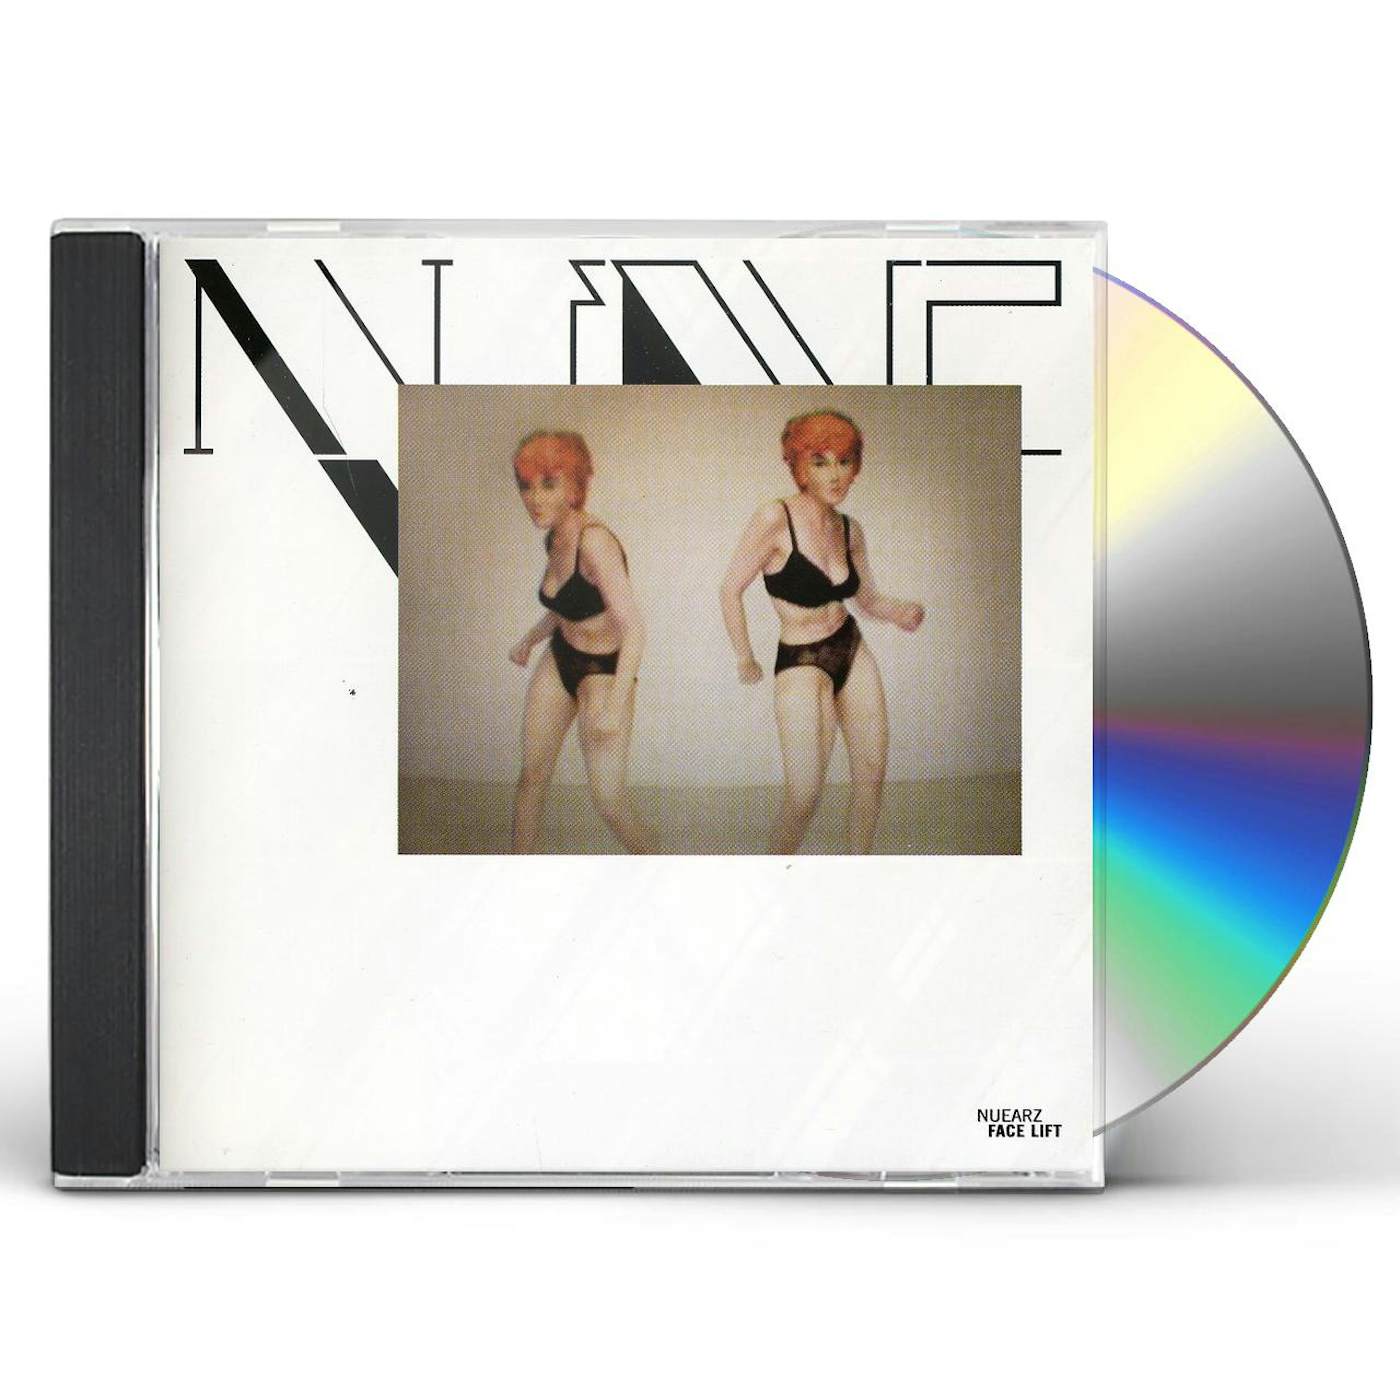 Nuearz FACE LIFT CD